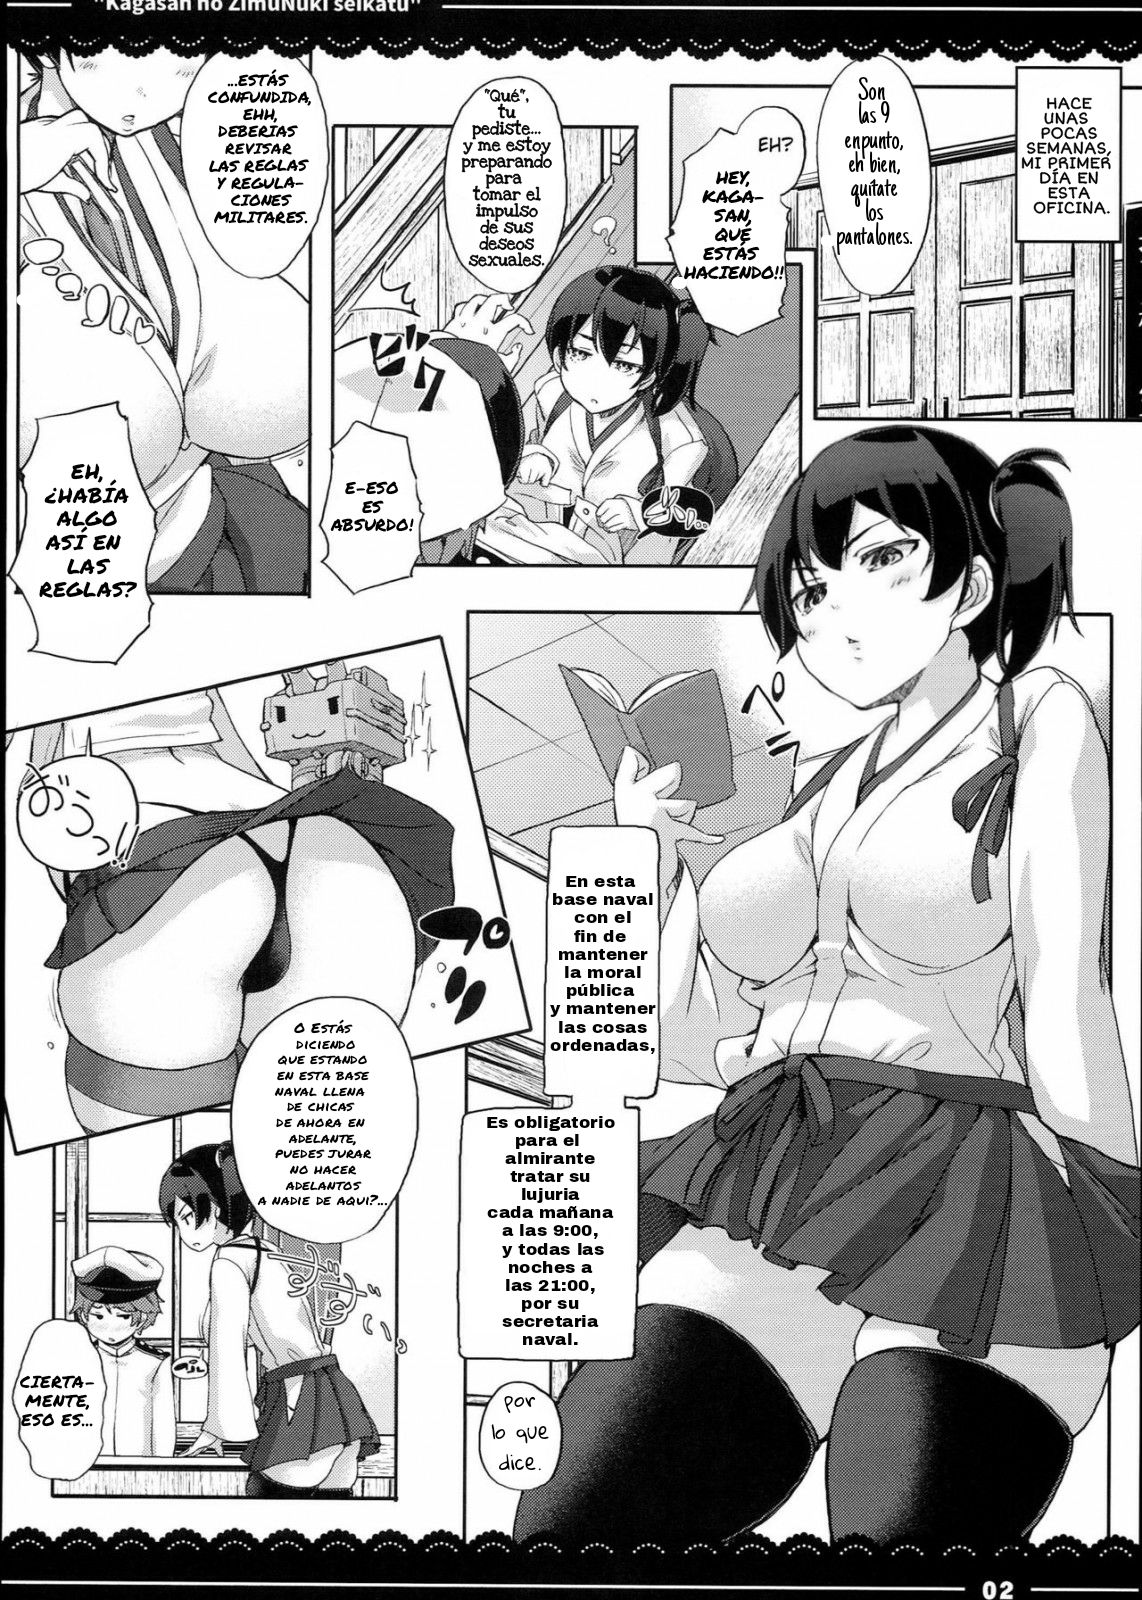 kaga-san's work skipping sex life-chapter 1 - 2